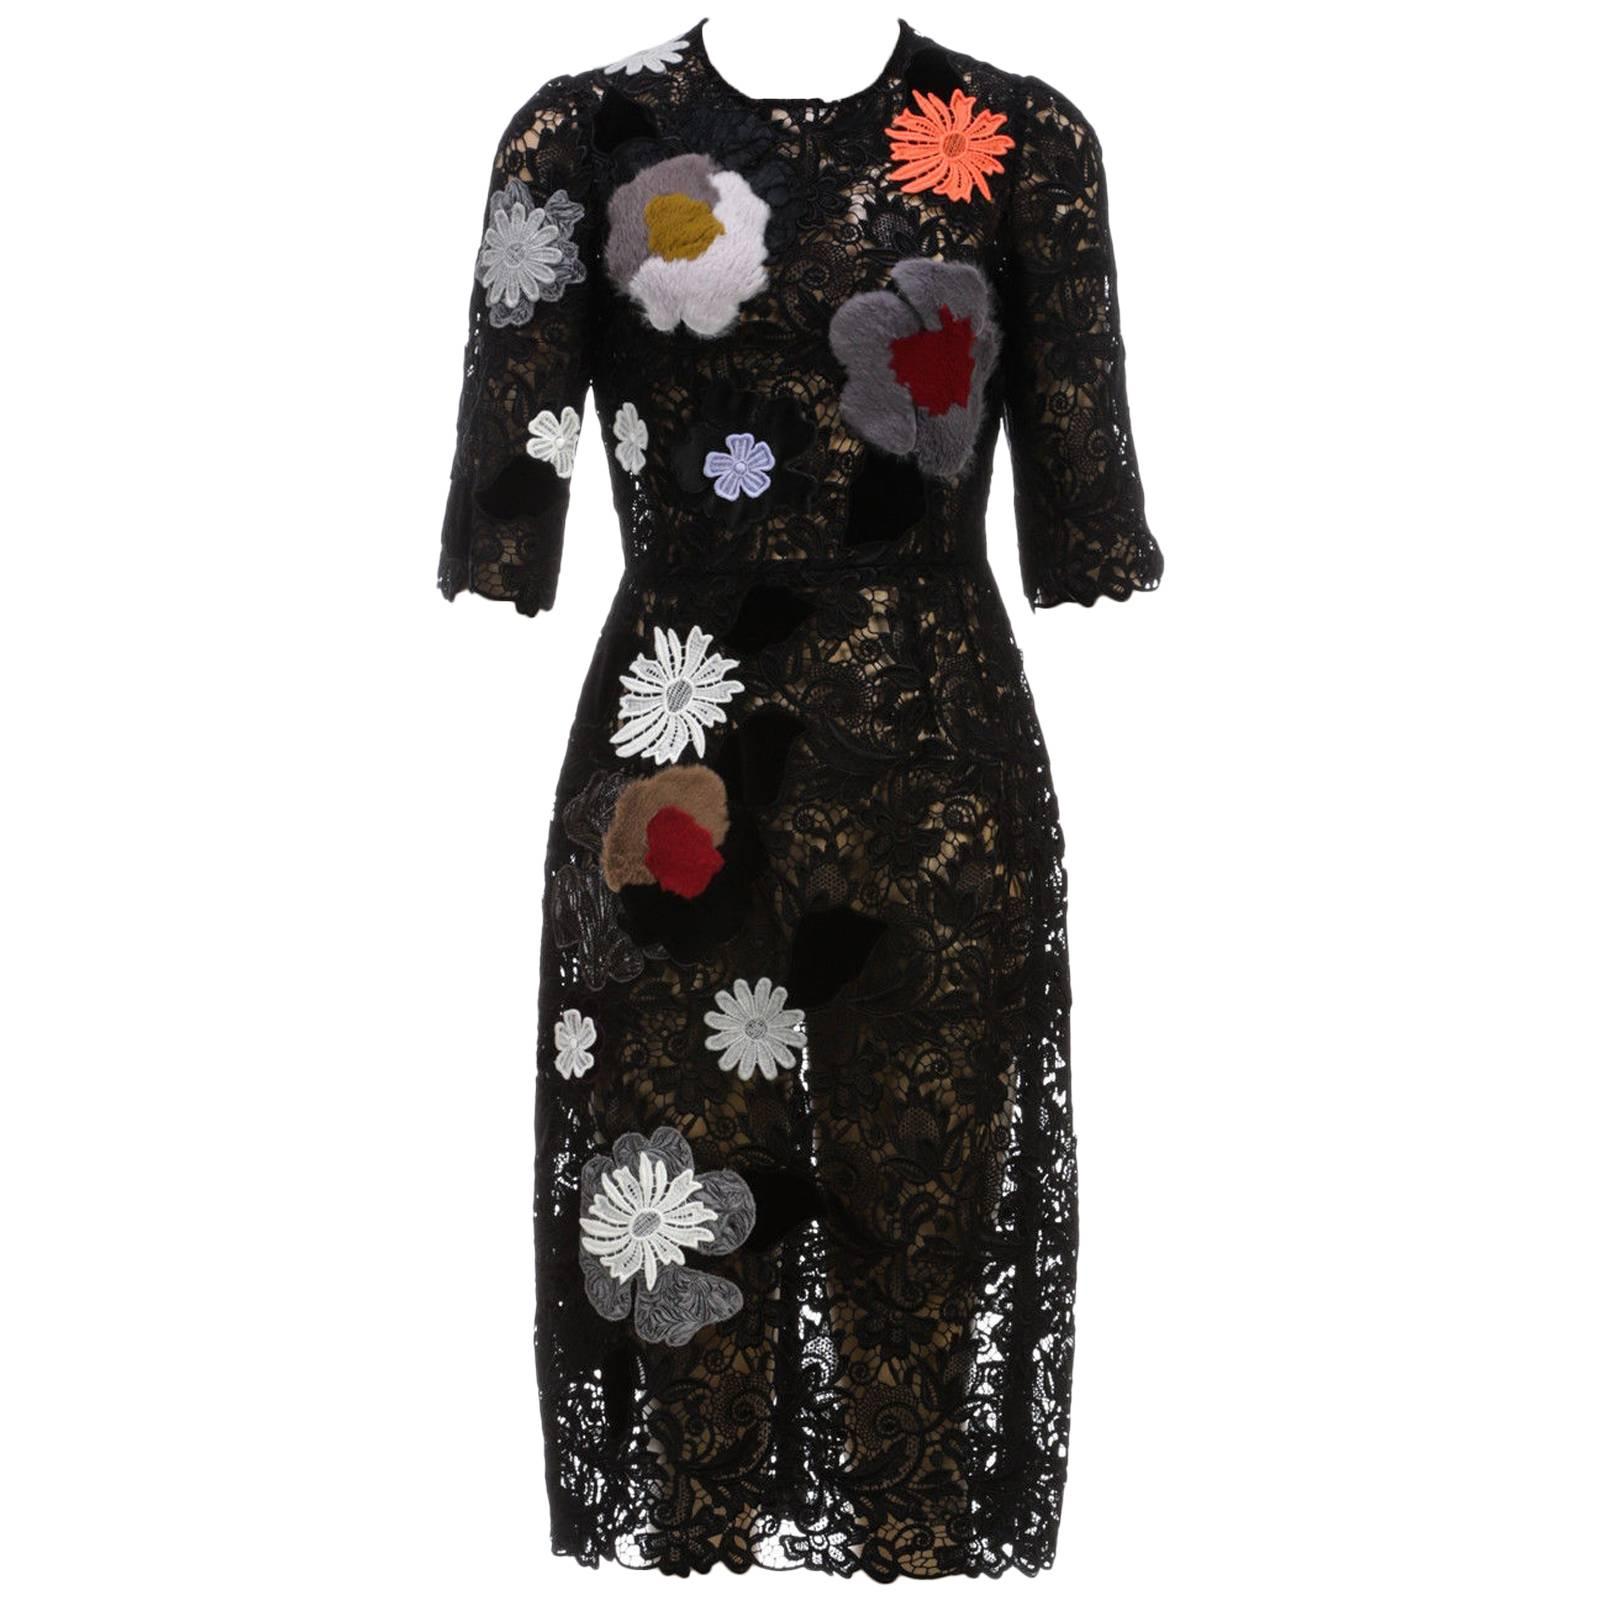 Dolce & Gabbana Black Half Sleeve Macrame Floral Applique Dress AW 14 (Size 40) For Sale